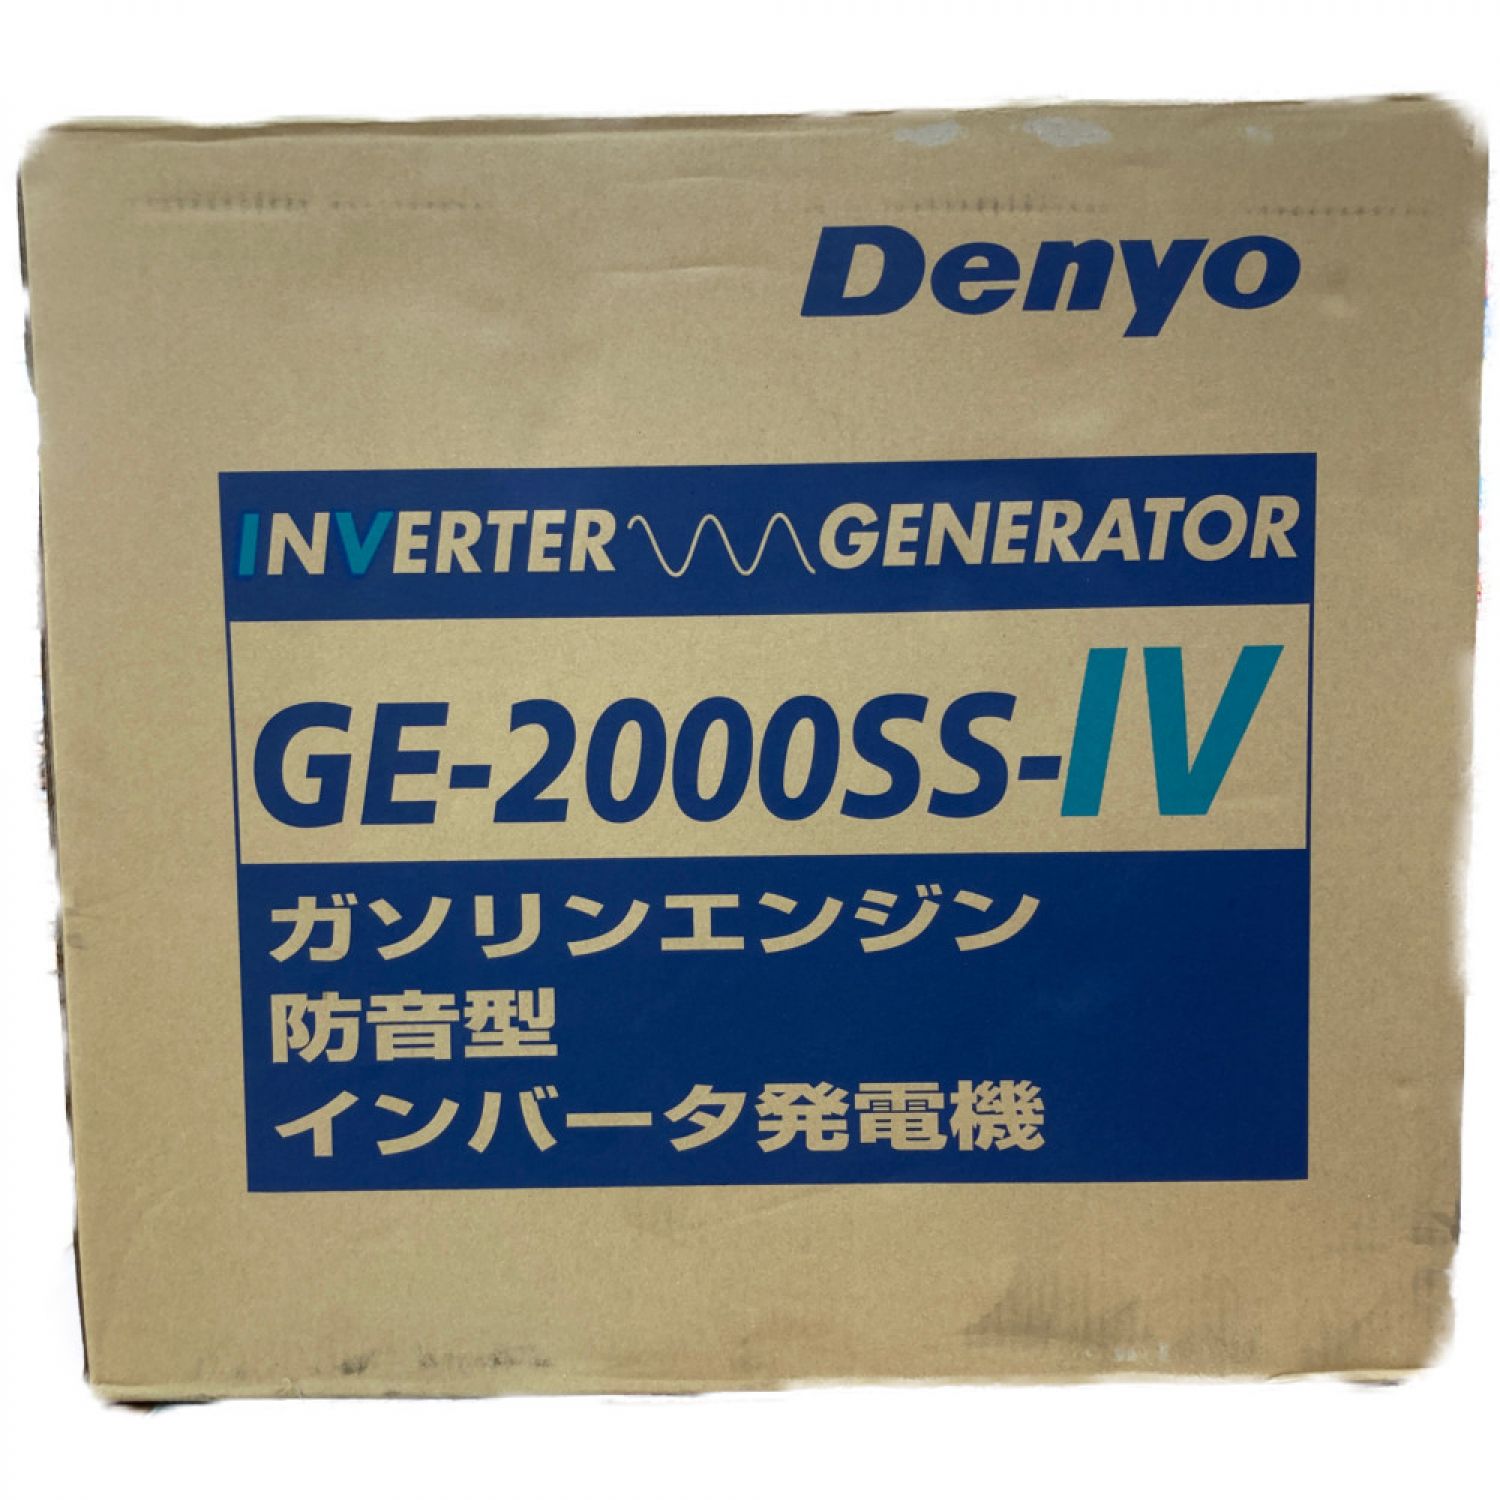 ●●Denyo ガソリンエンジン 防音型インバータ発電機 GE-2000SS-Ⅳ